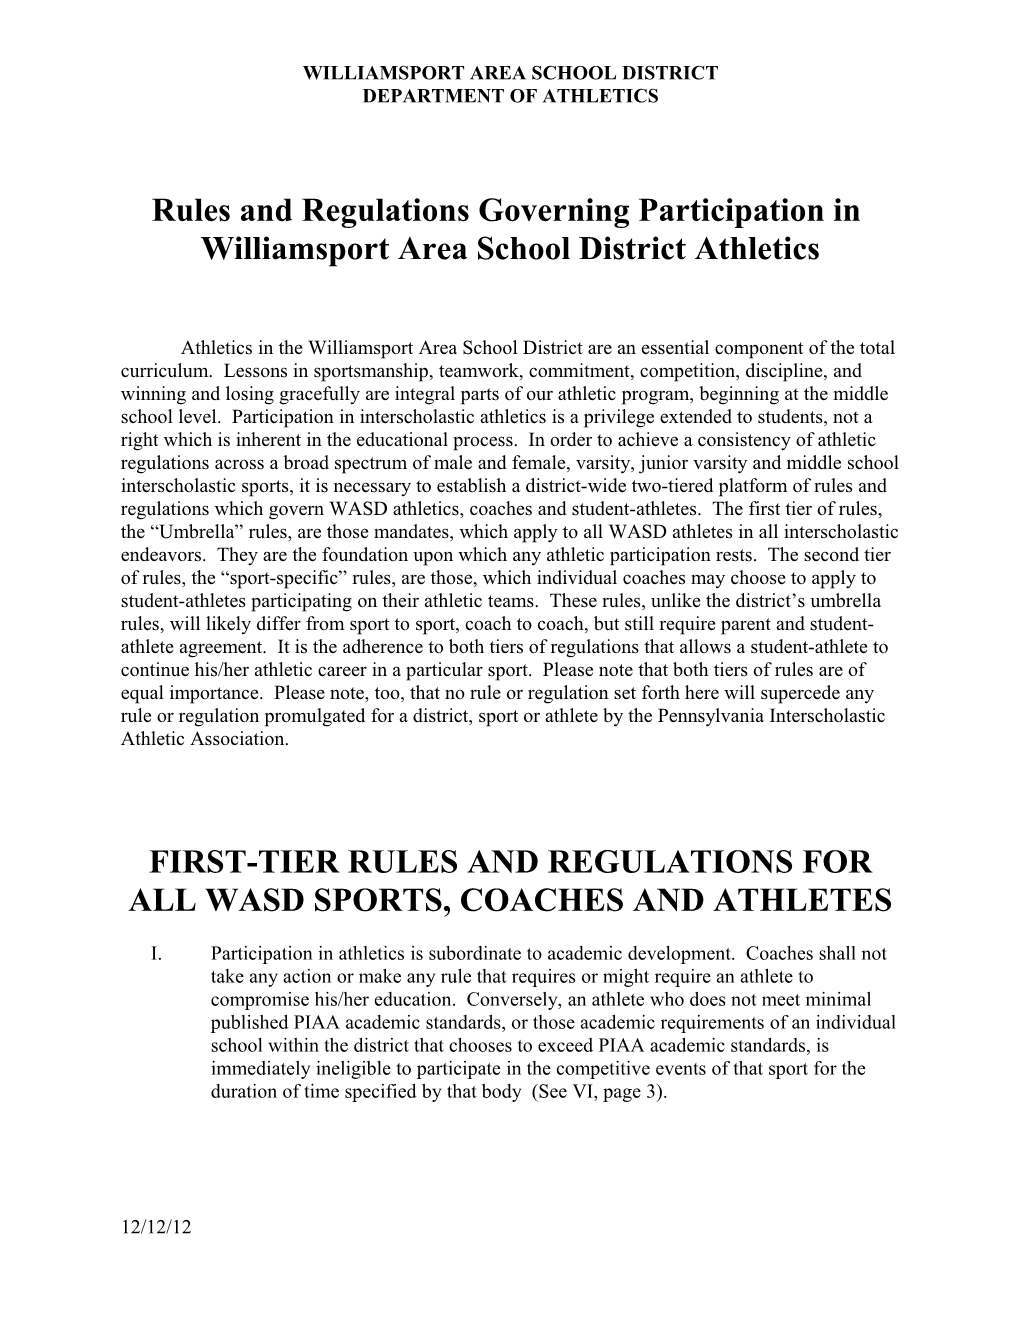 Williamsport Area School District Rules & Regulations for Interscholastic Athletics